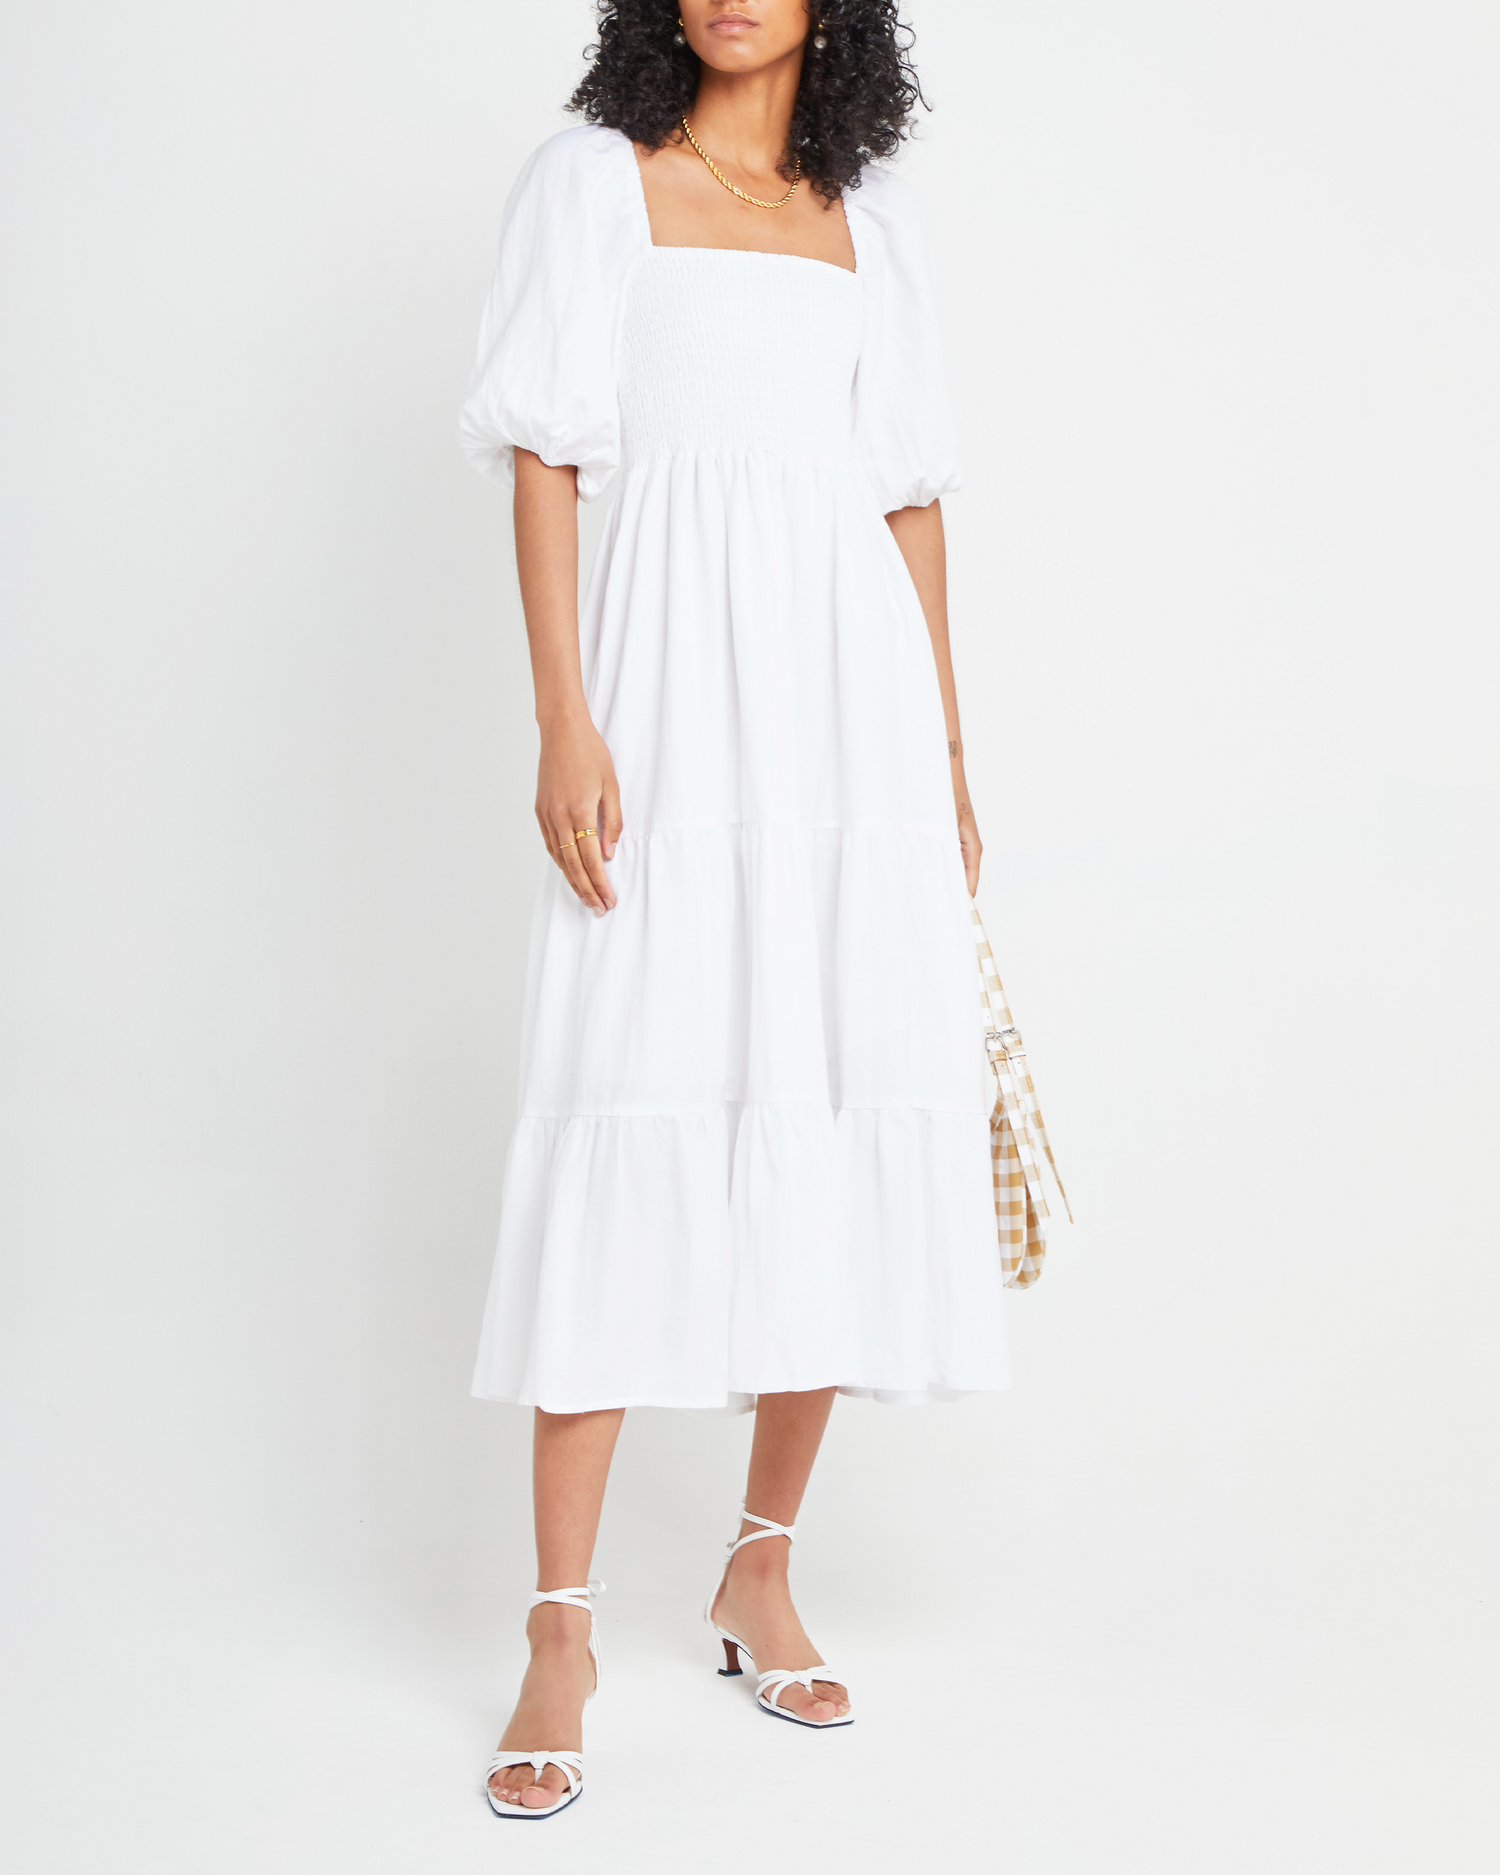 Fourth image of Hera Dress, a white midi dress, smocked bodice, puff sleeves, short sleeves